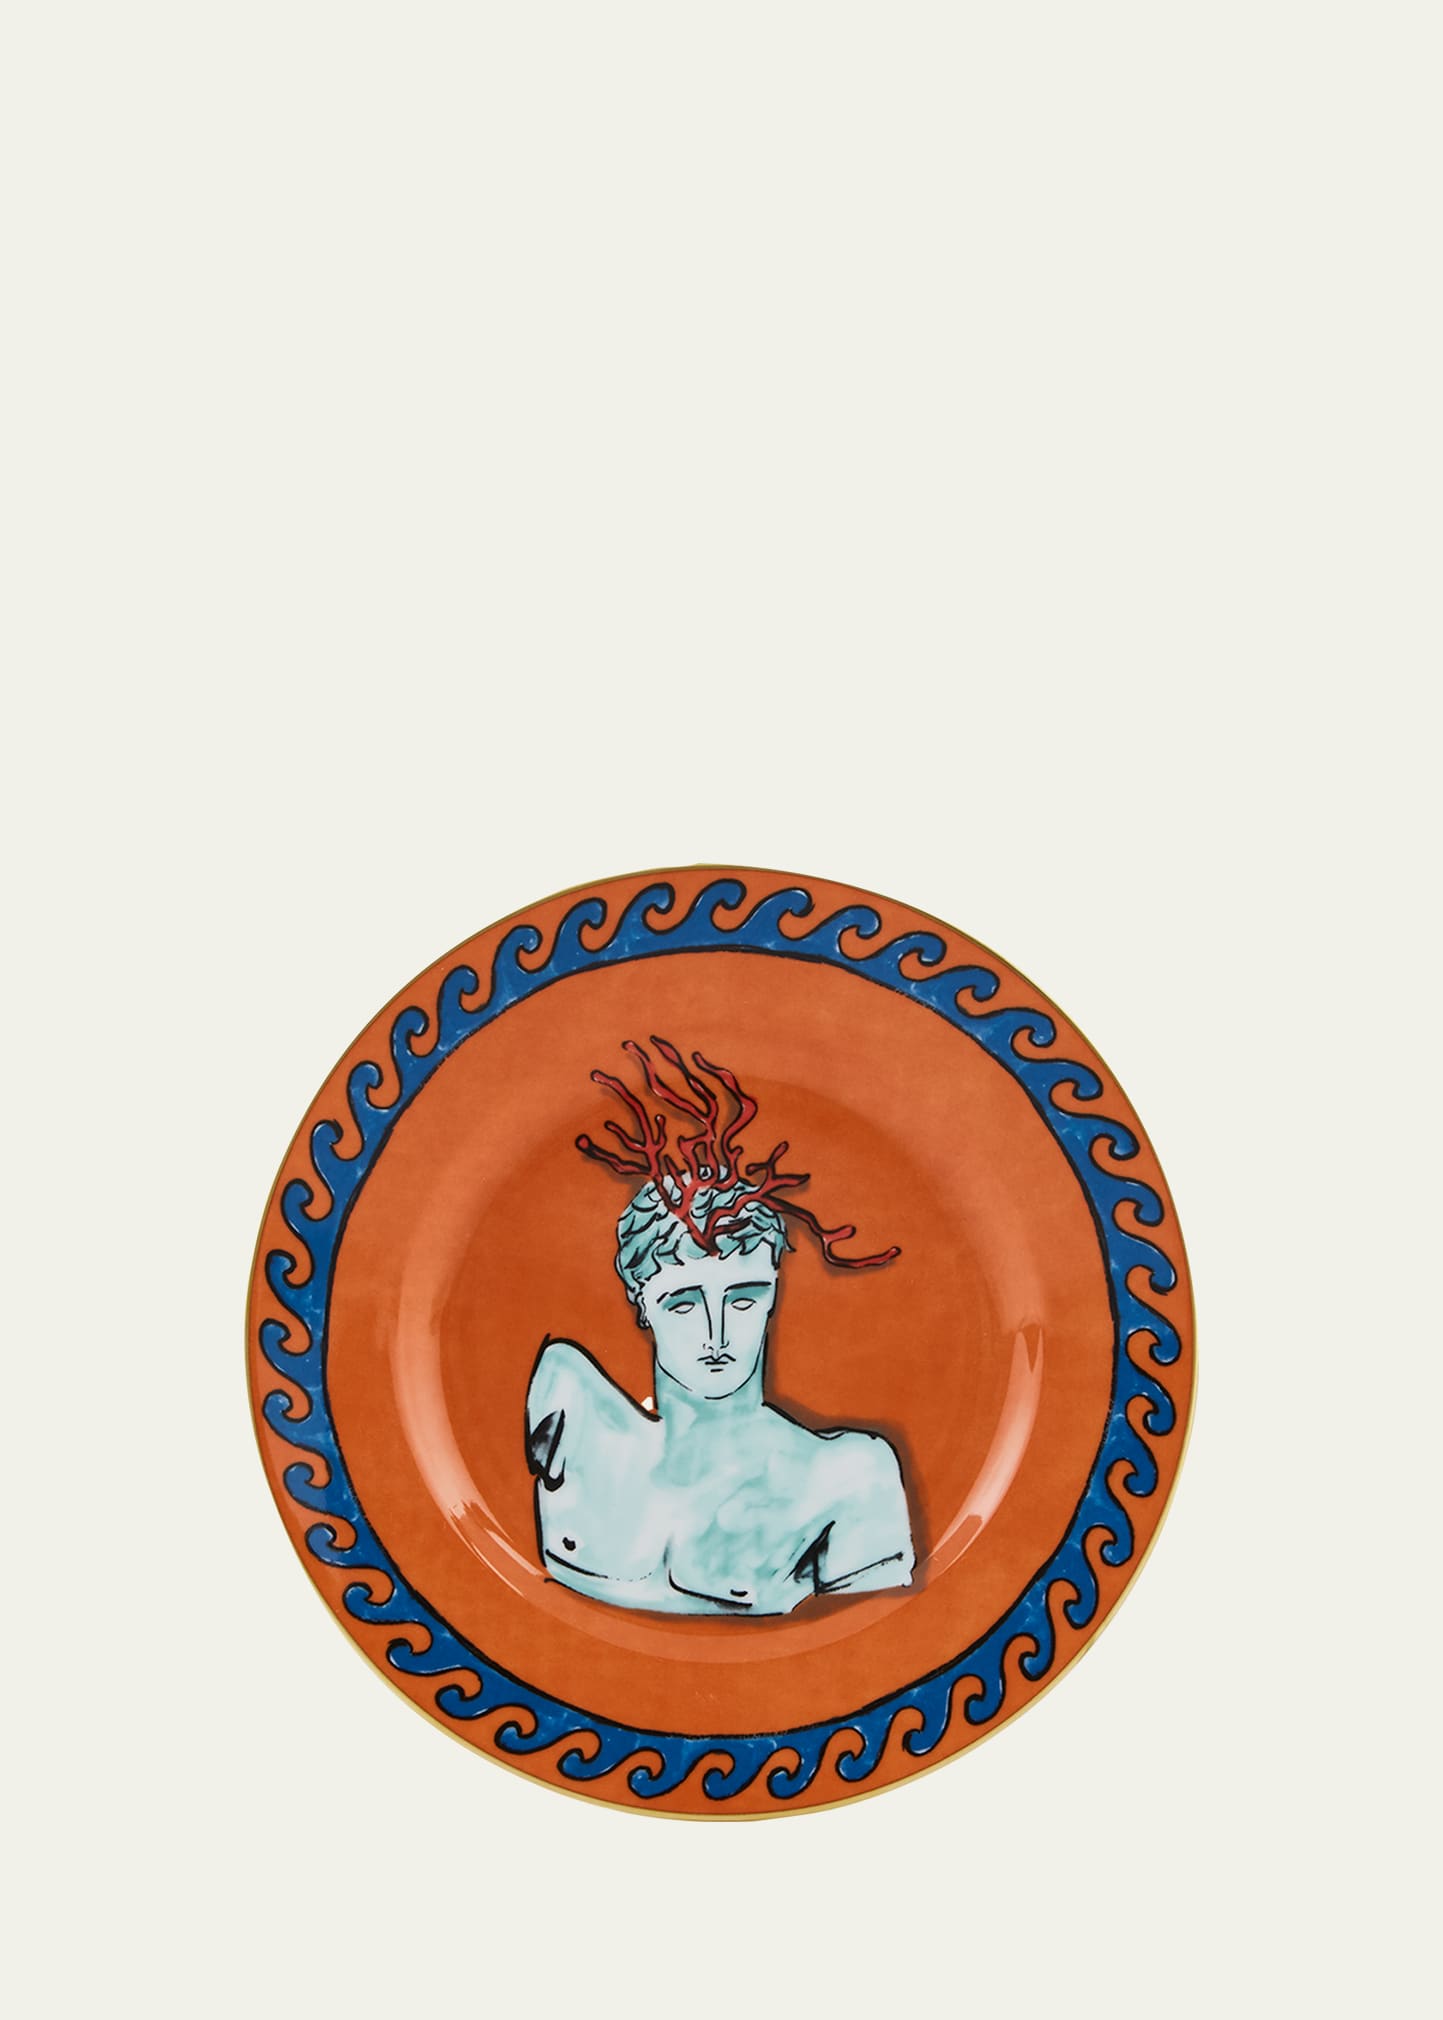 Ginori 1735 Neptune's Voyage Dessert Plate In Orange